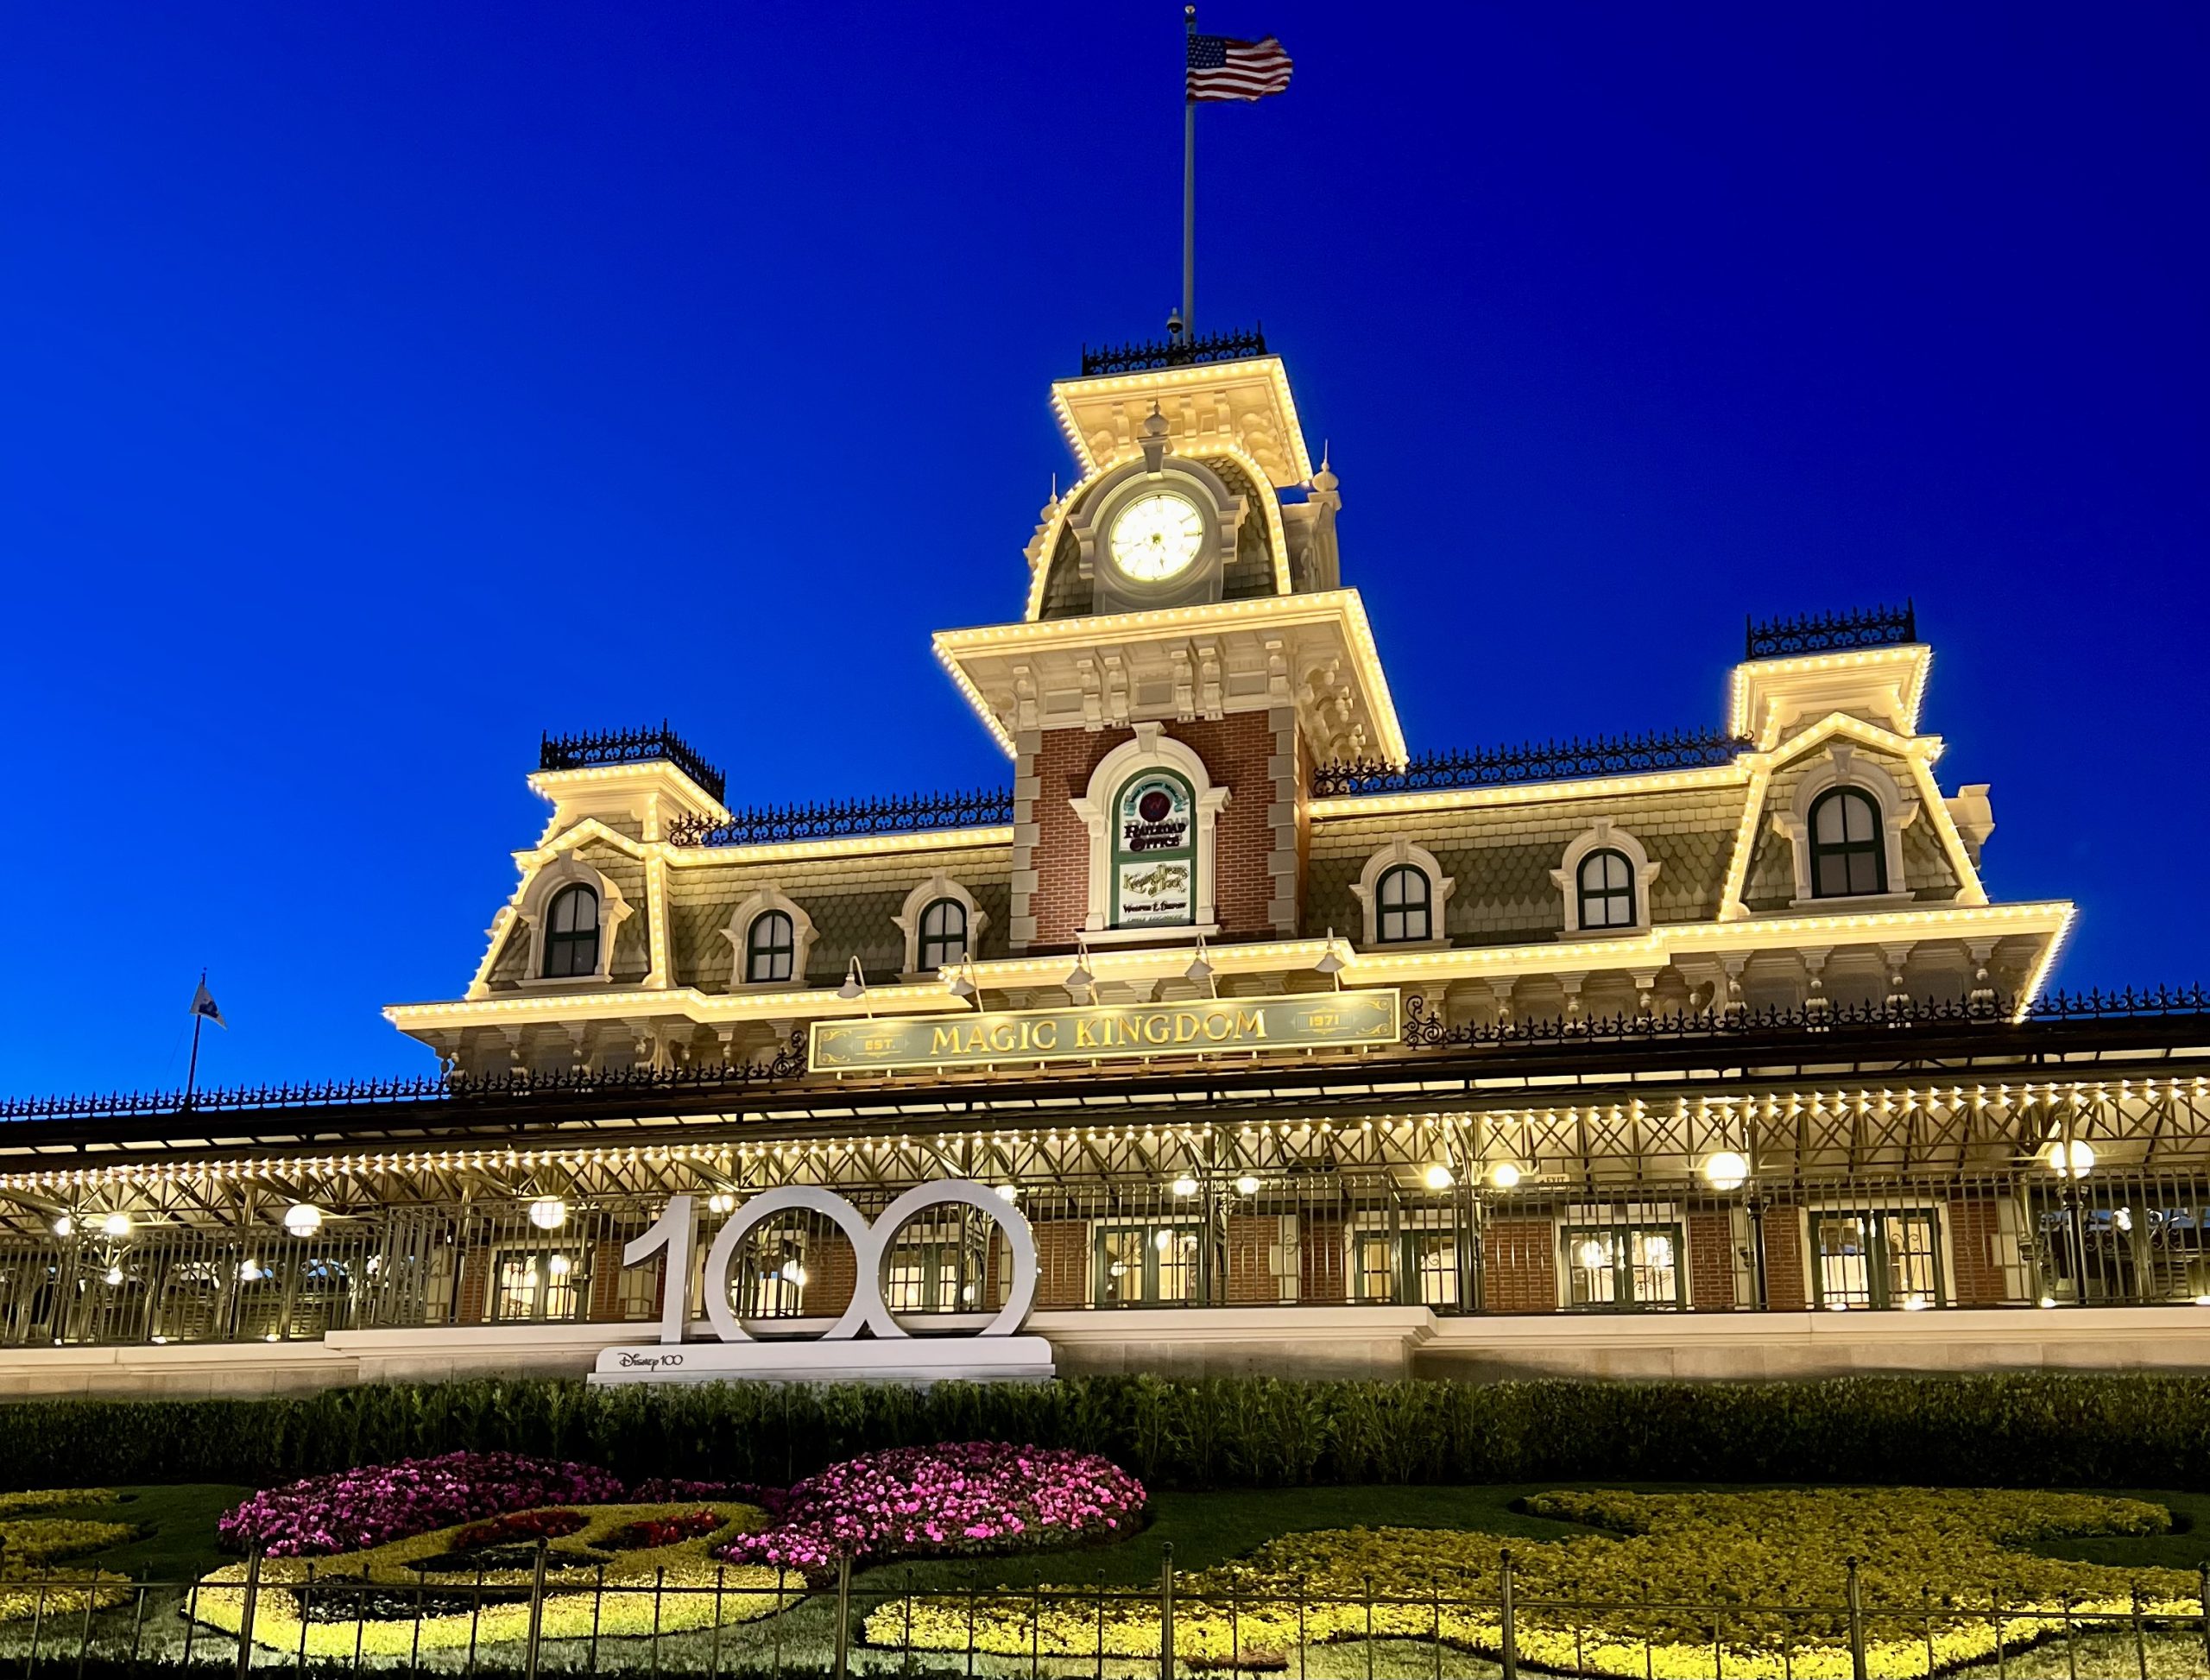 Disney Celebrates Its 100th Anniversary Throughout October - The Walt Disney  Company